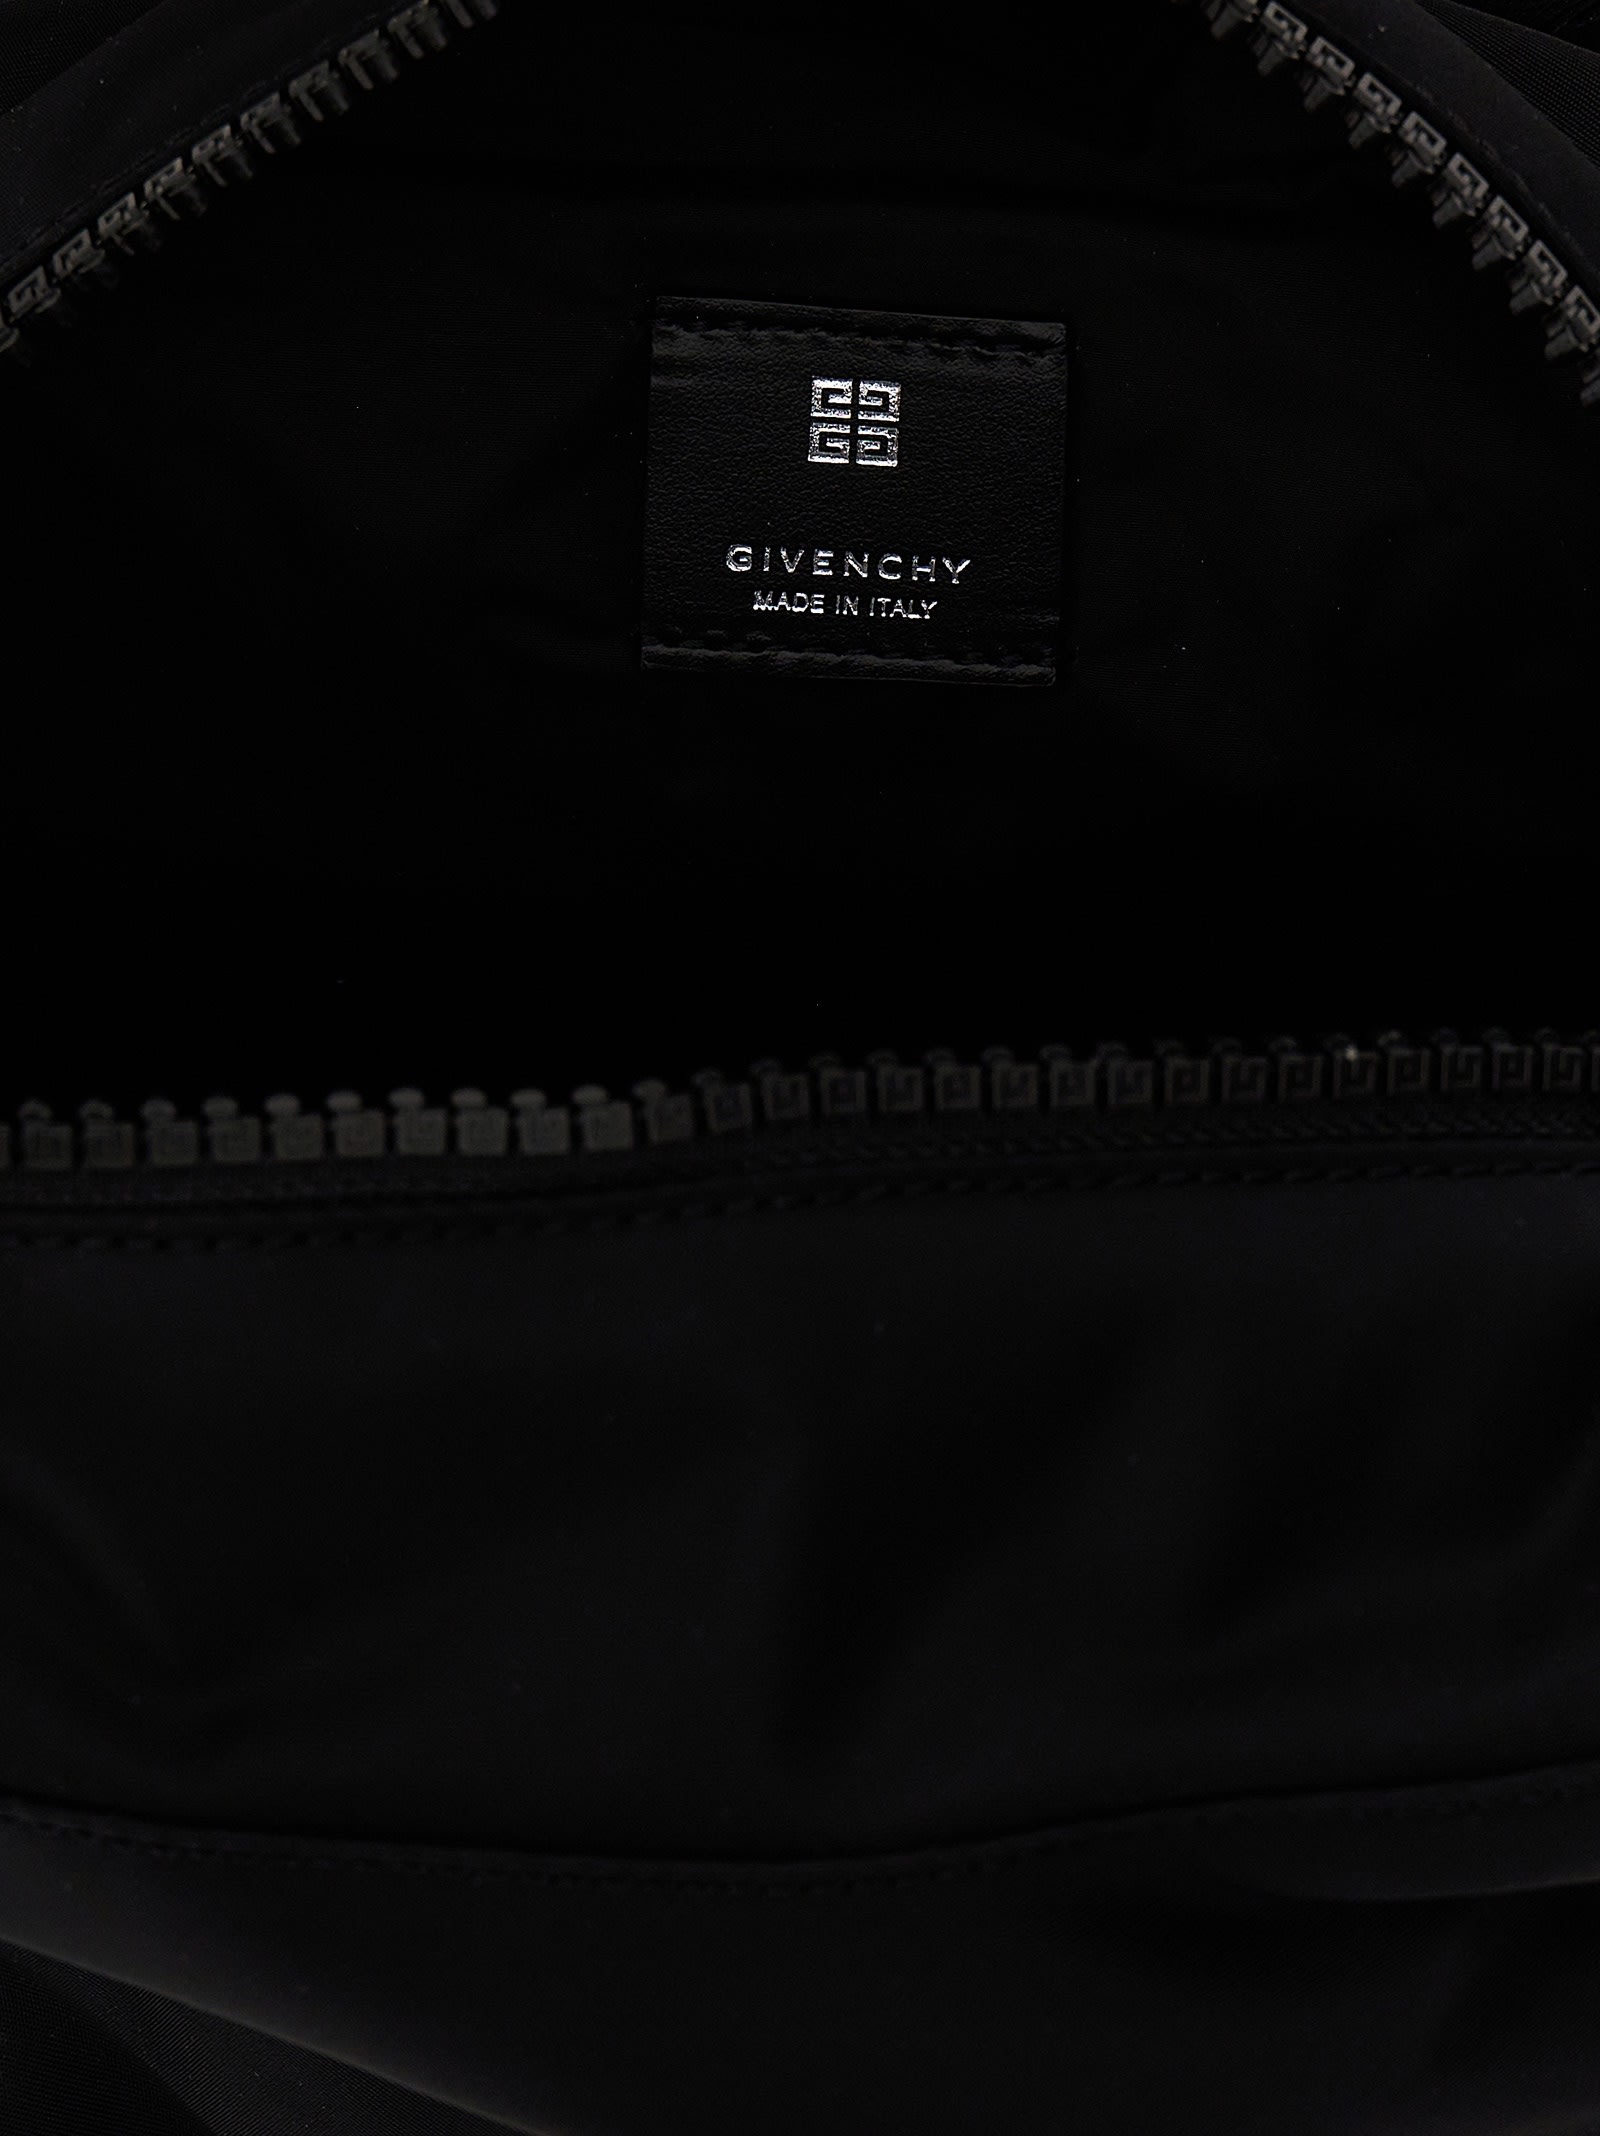 Shop Givenchy Pandora Small Crossbody Bag In Black